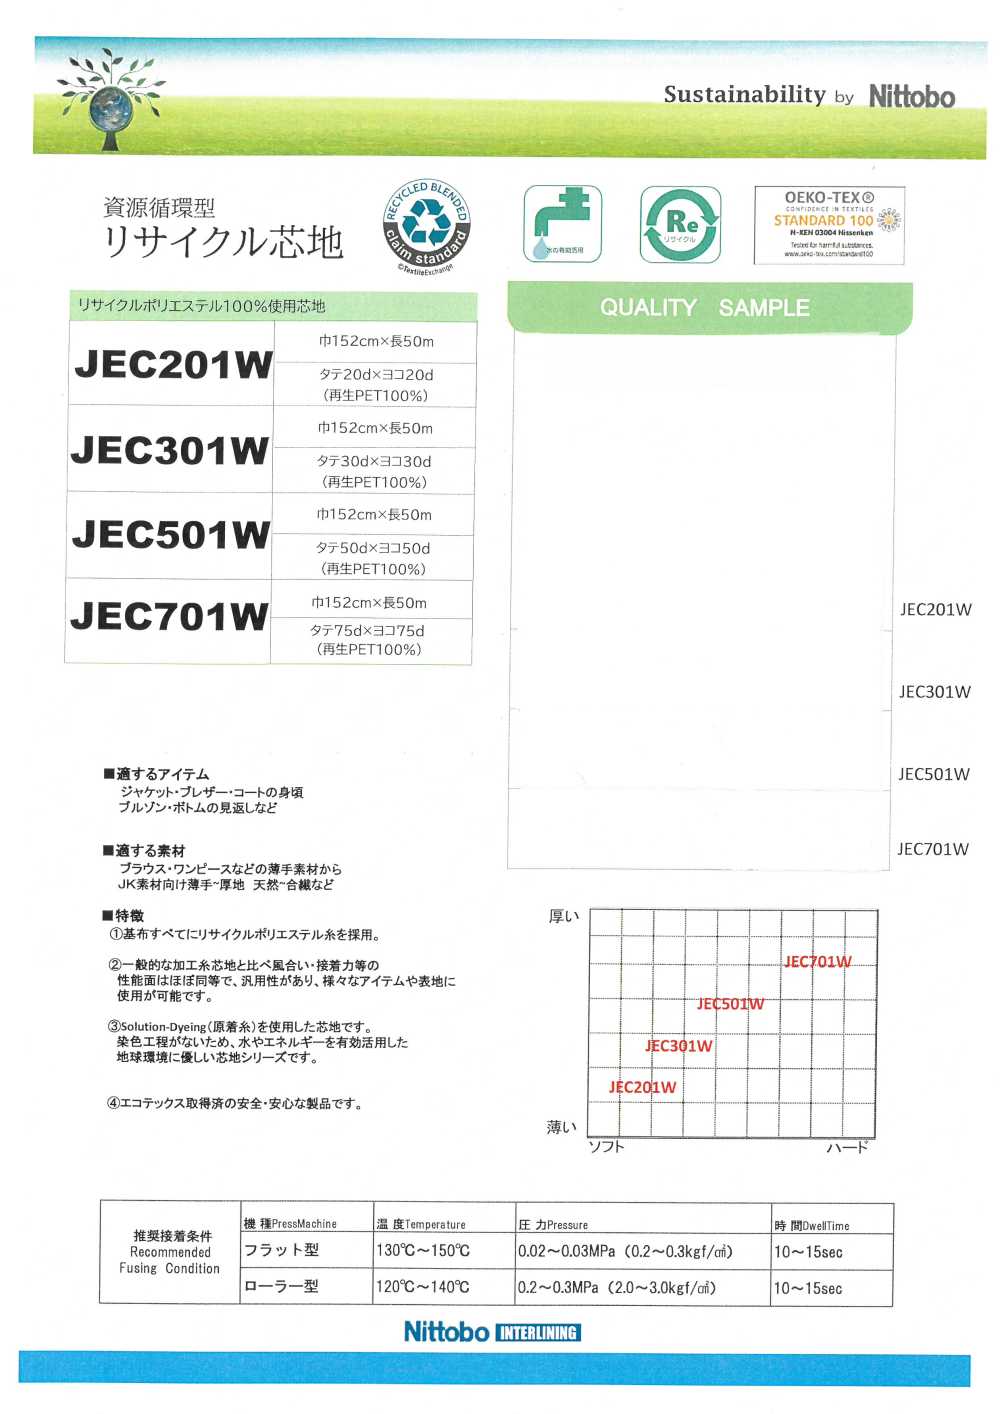 JEC301W 薄型多功能柔软衬布 30D 使用再生材料 日东纺绩